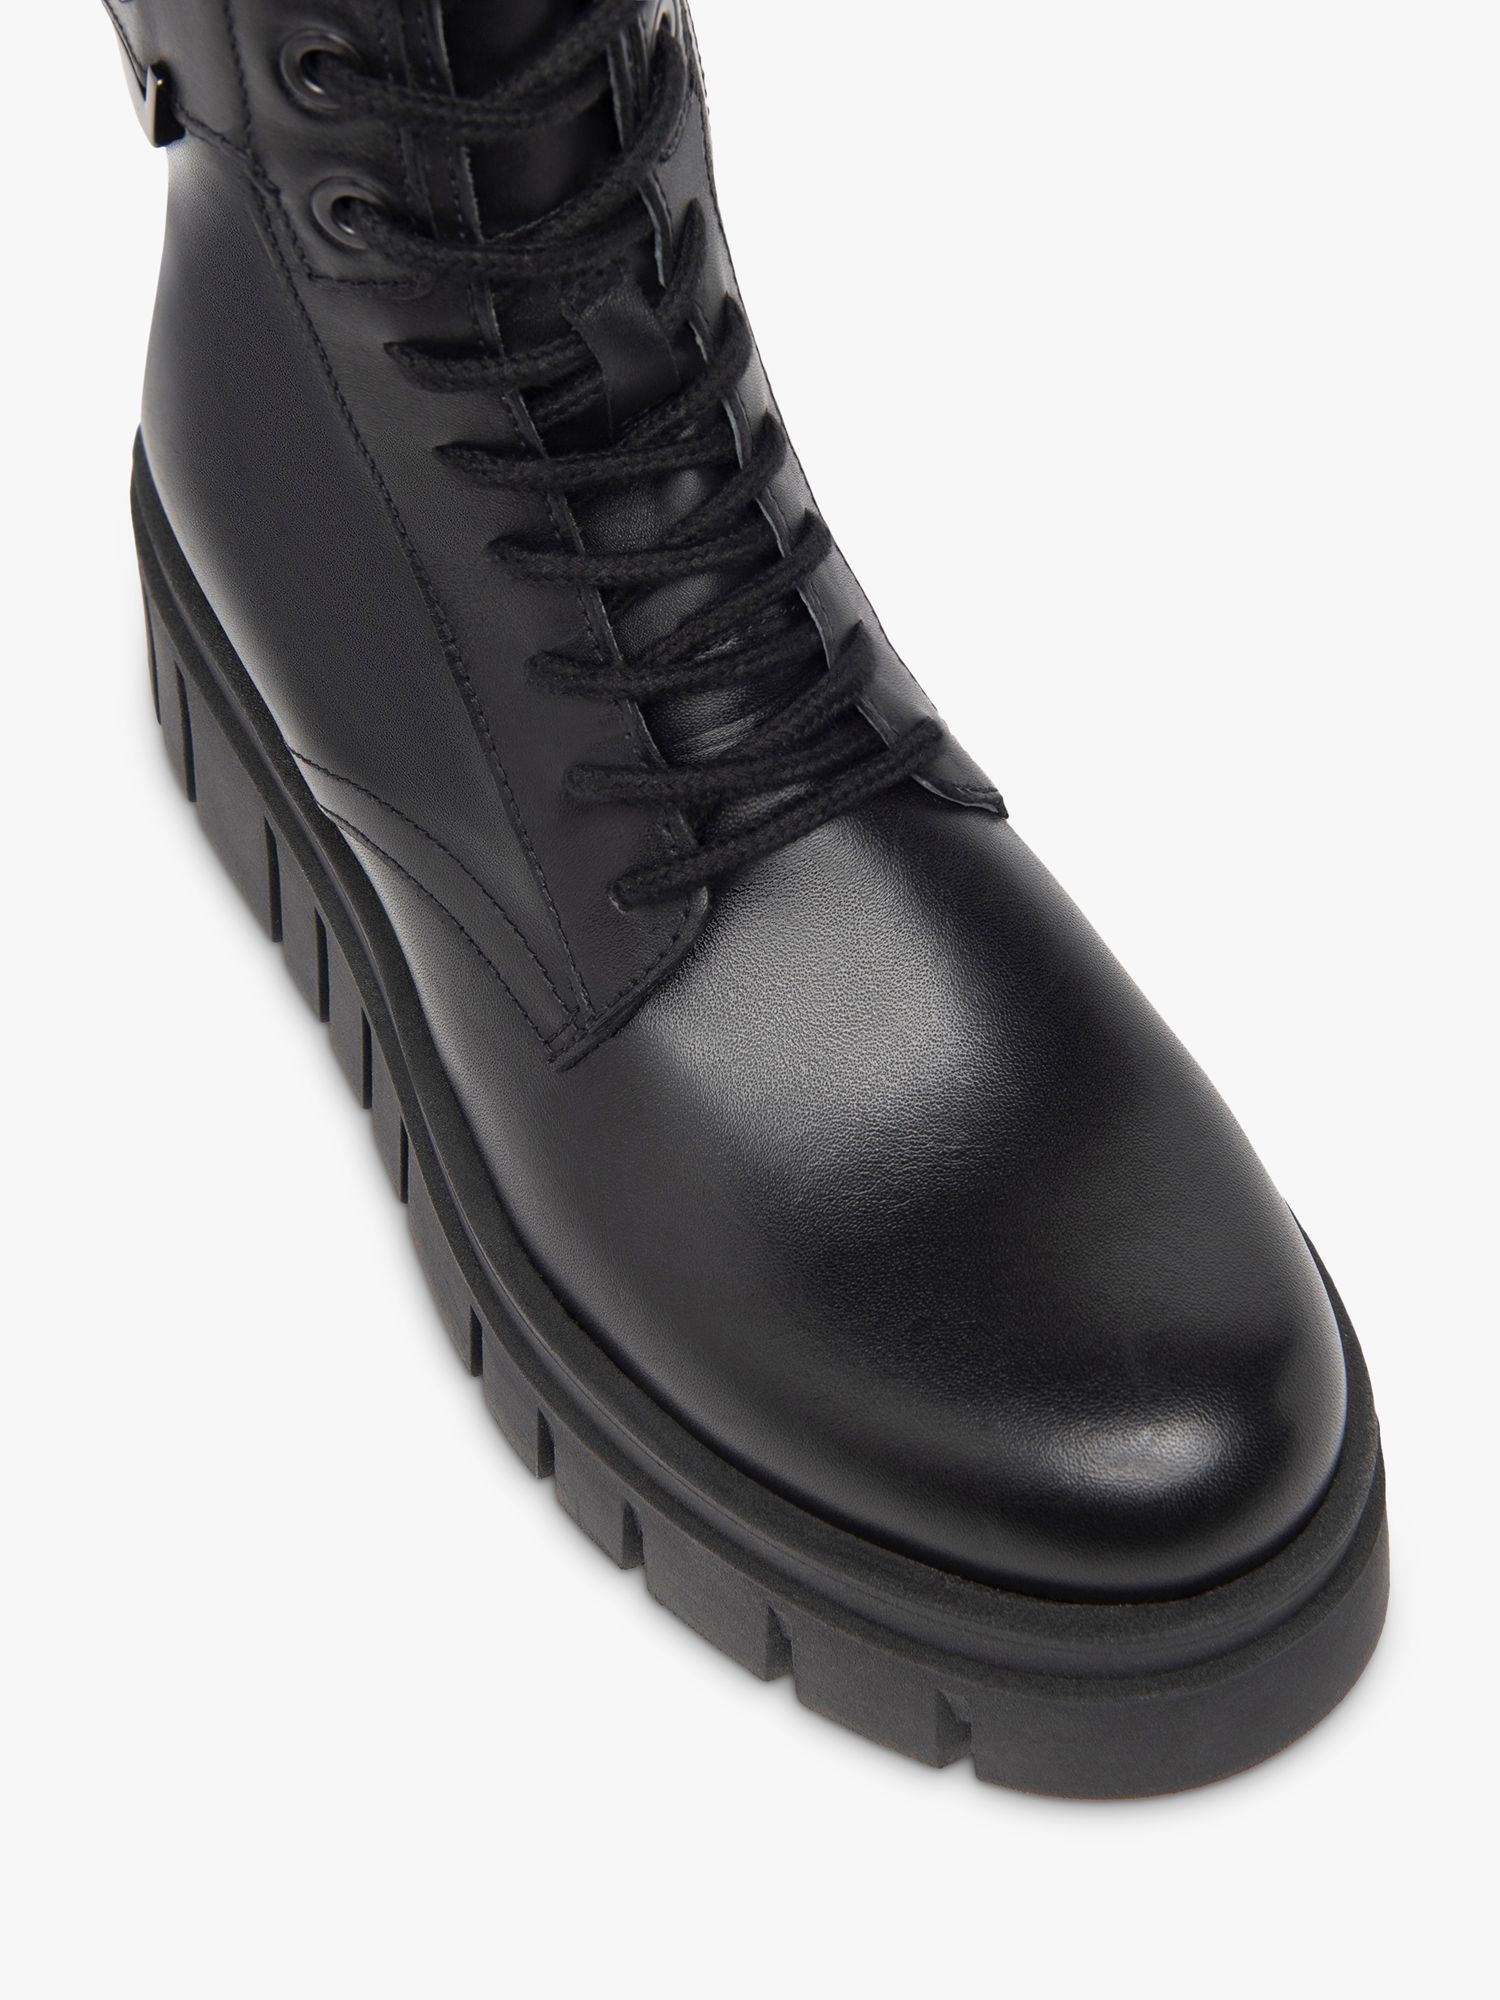 NeroGiardini Leather Ridge Sole Biker Boots, Black at John Lewis & Partners